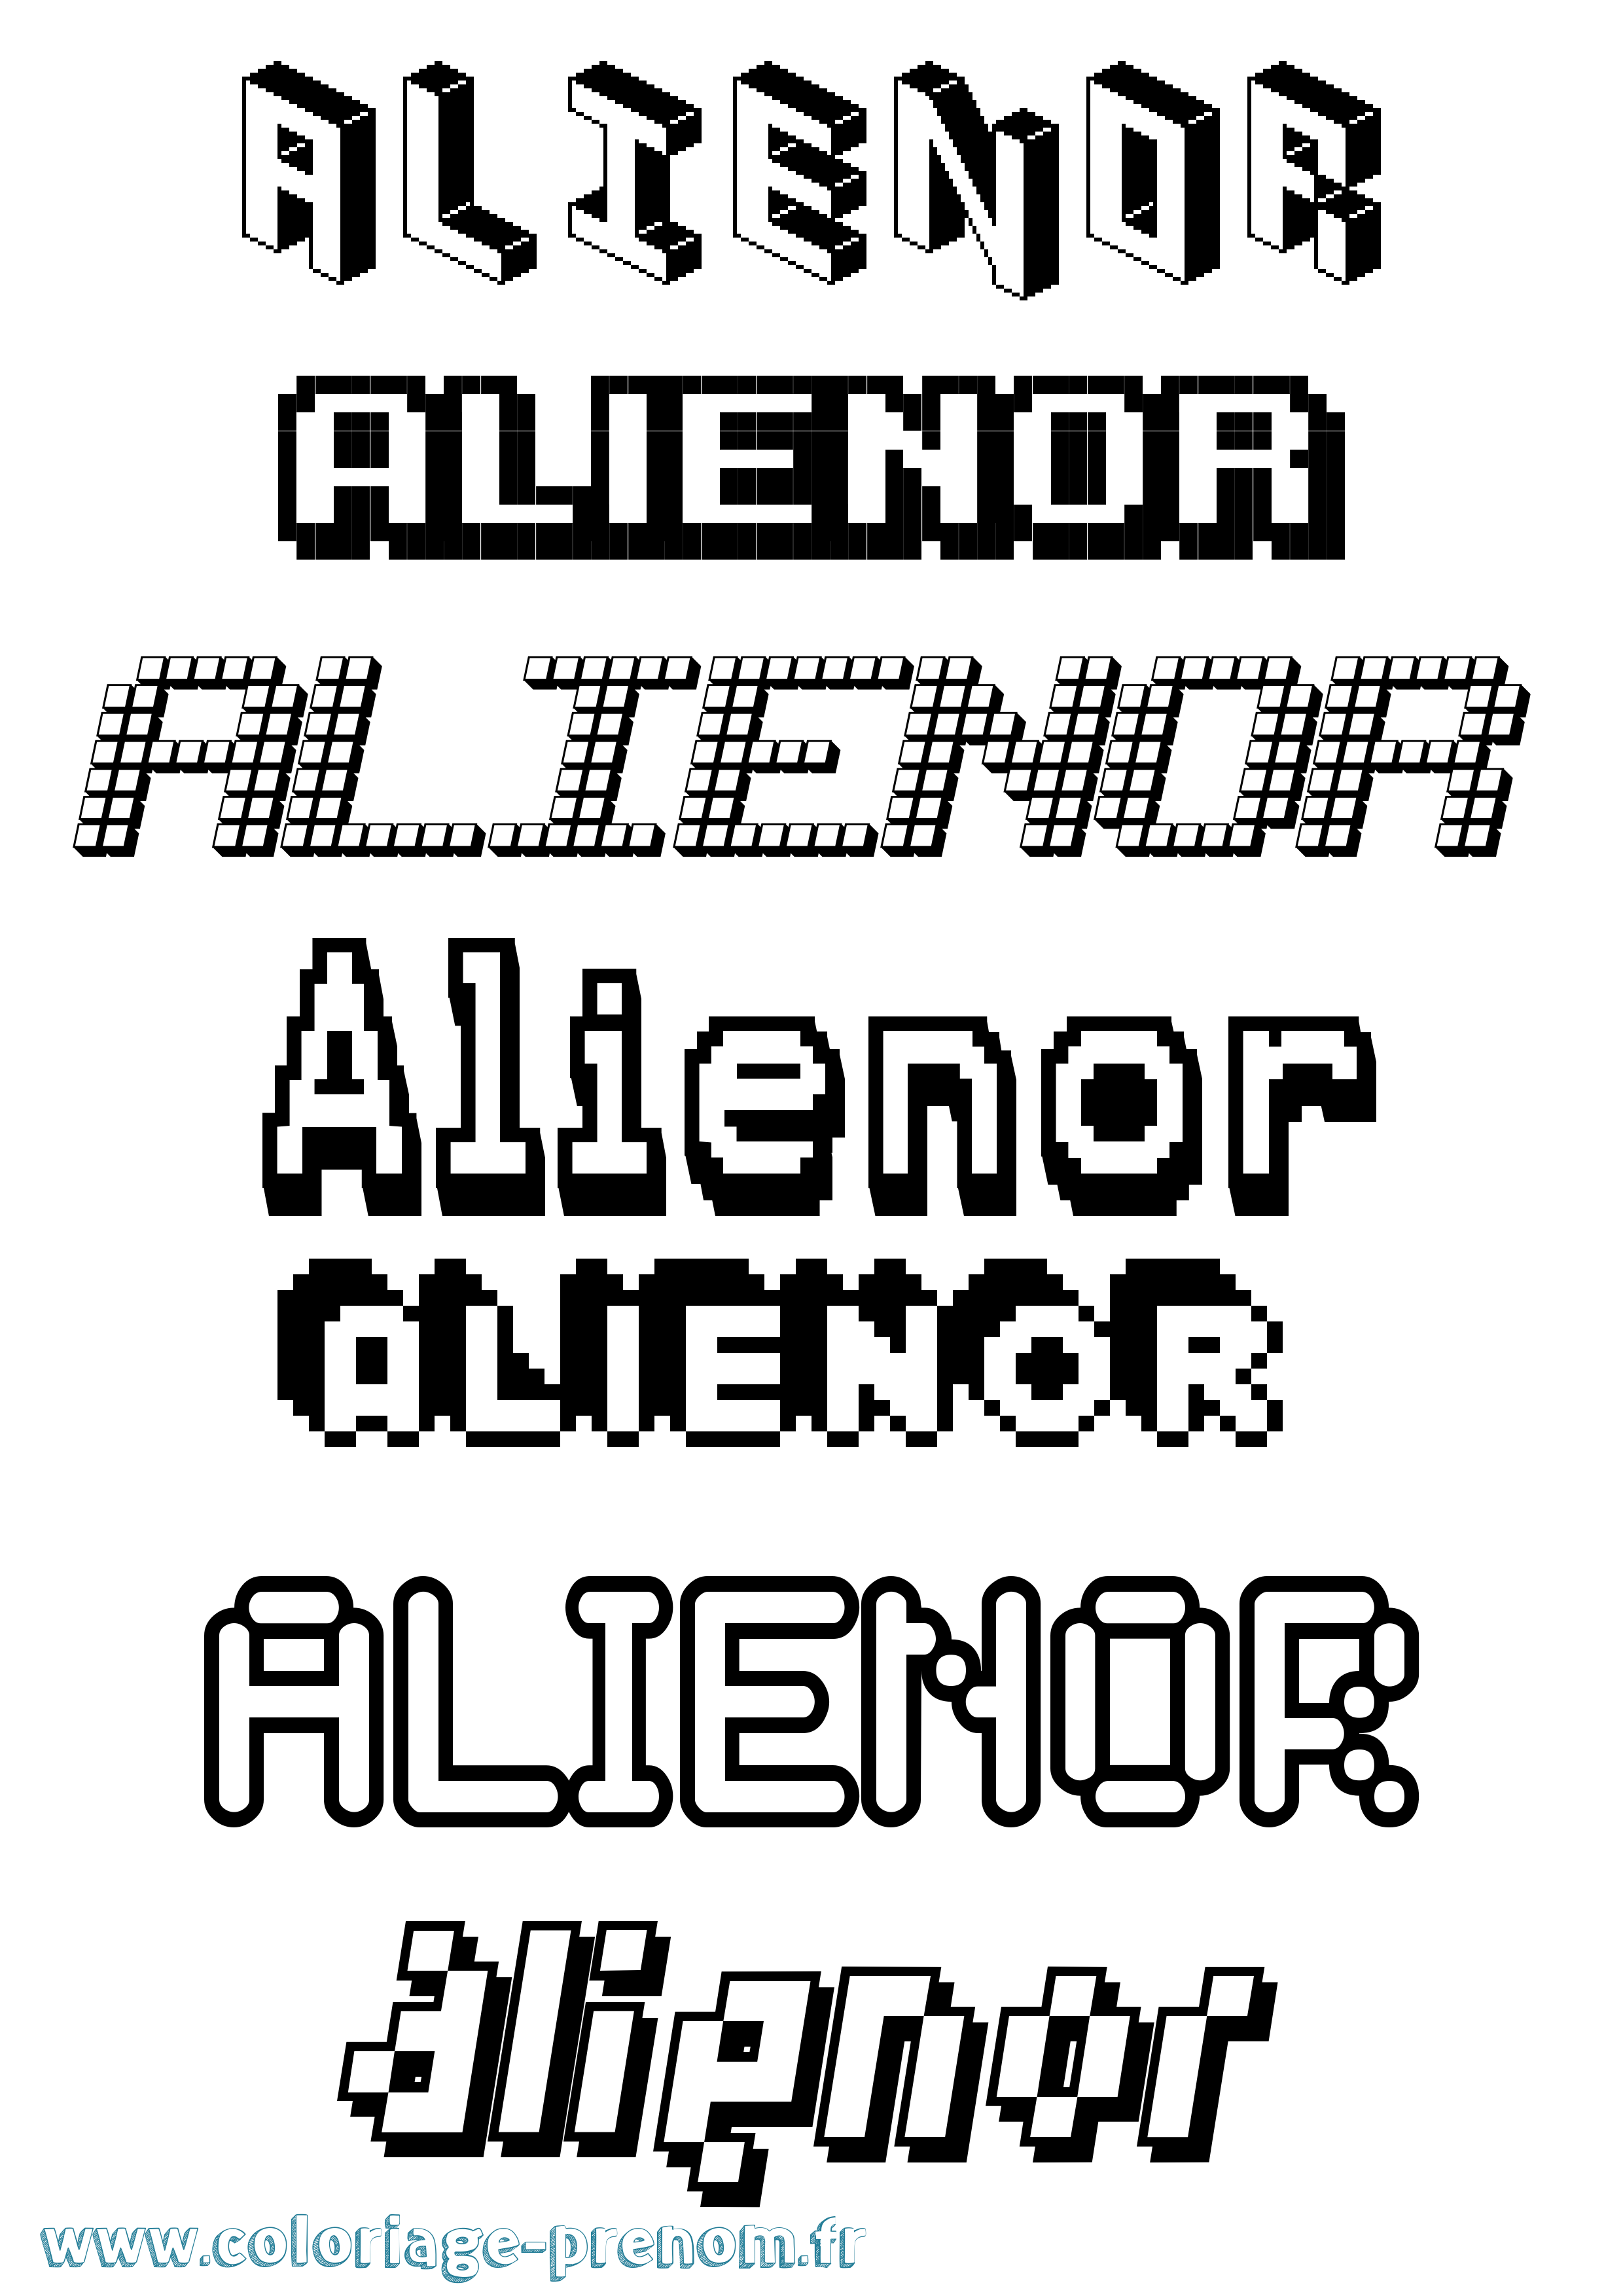 Coloriage prénom Alienor